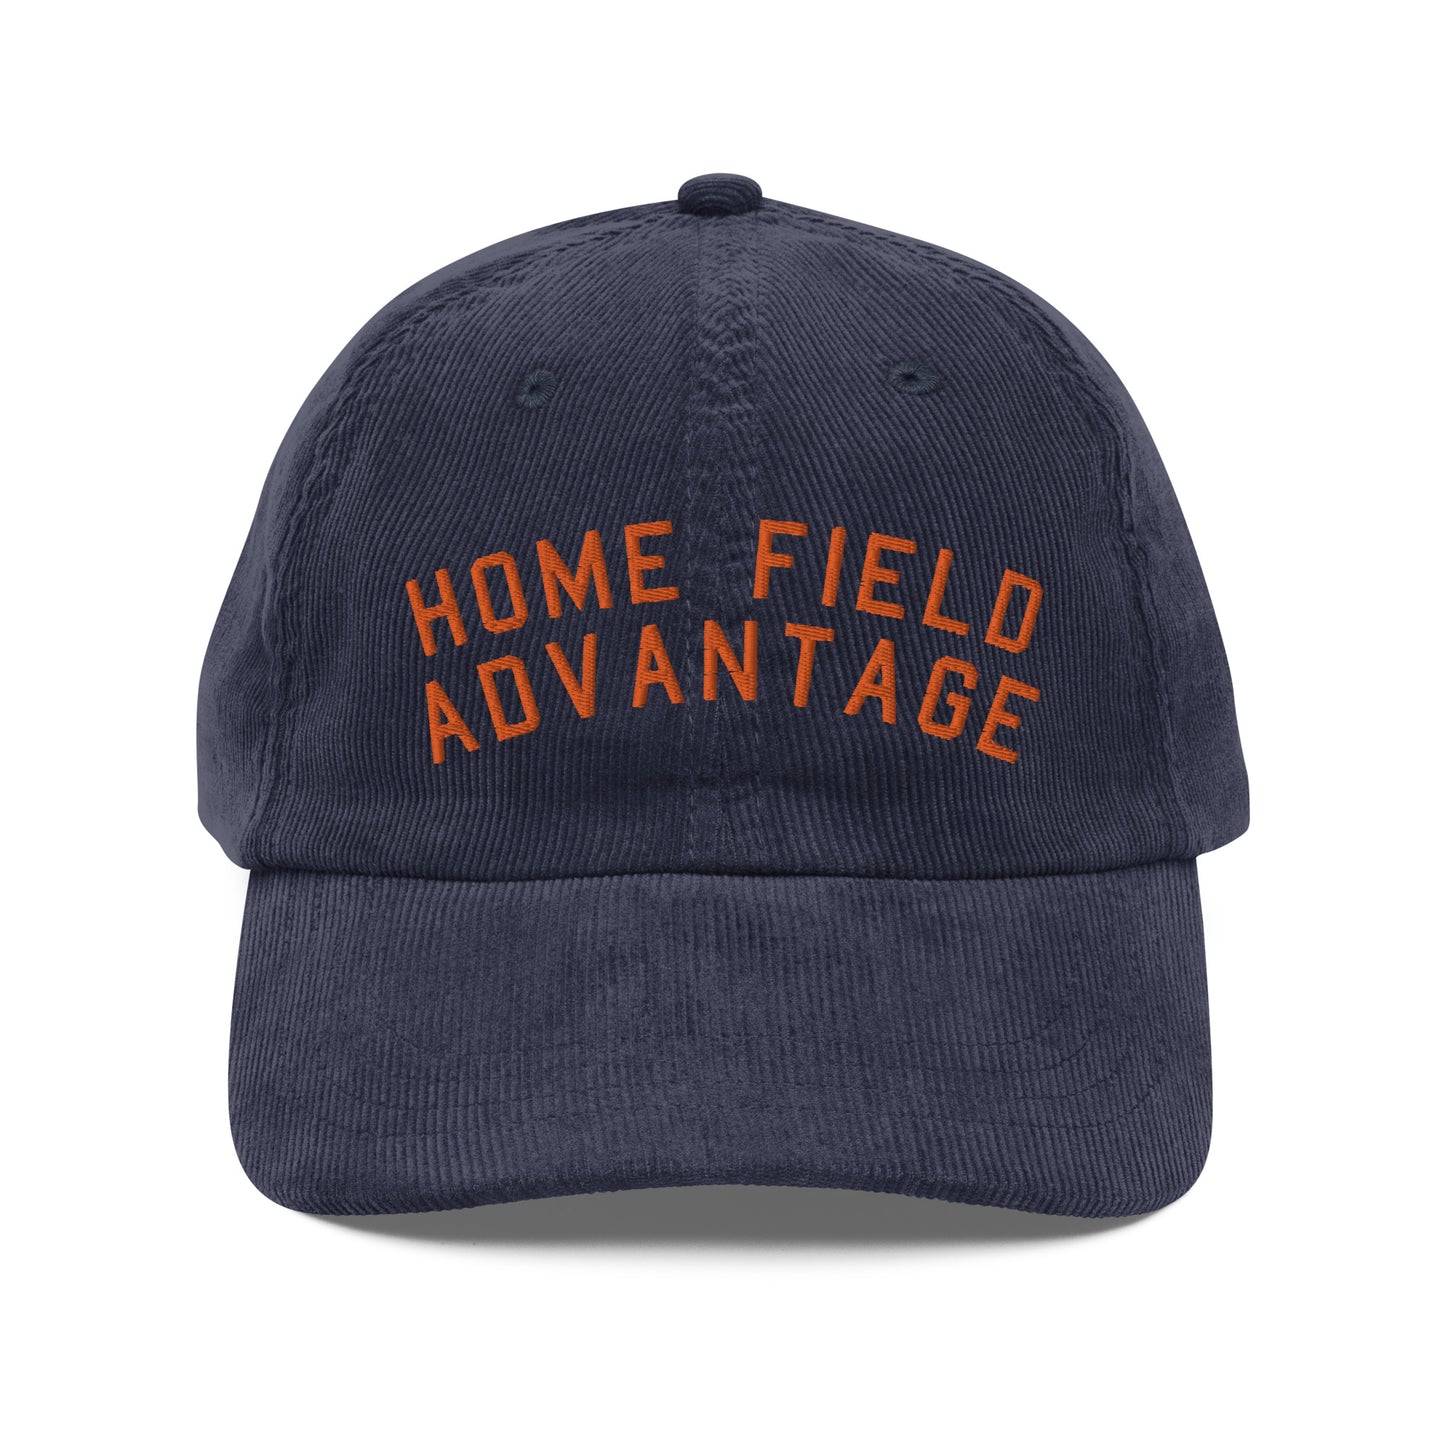 Home Field Advantage Custom Vintage Corduroy Baseball Hat navy orange